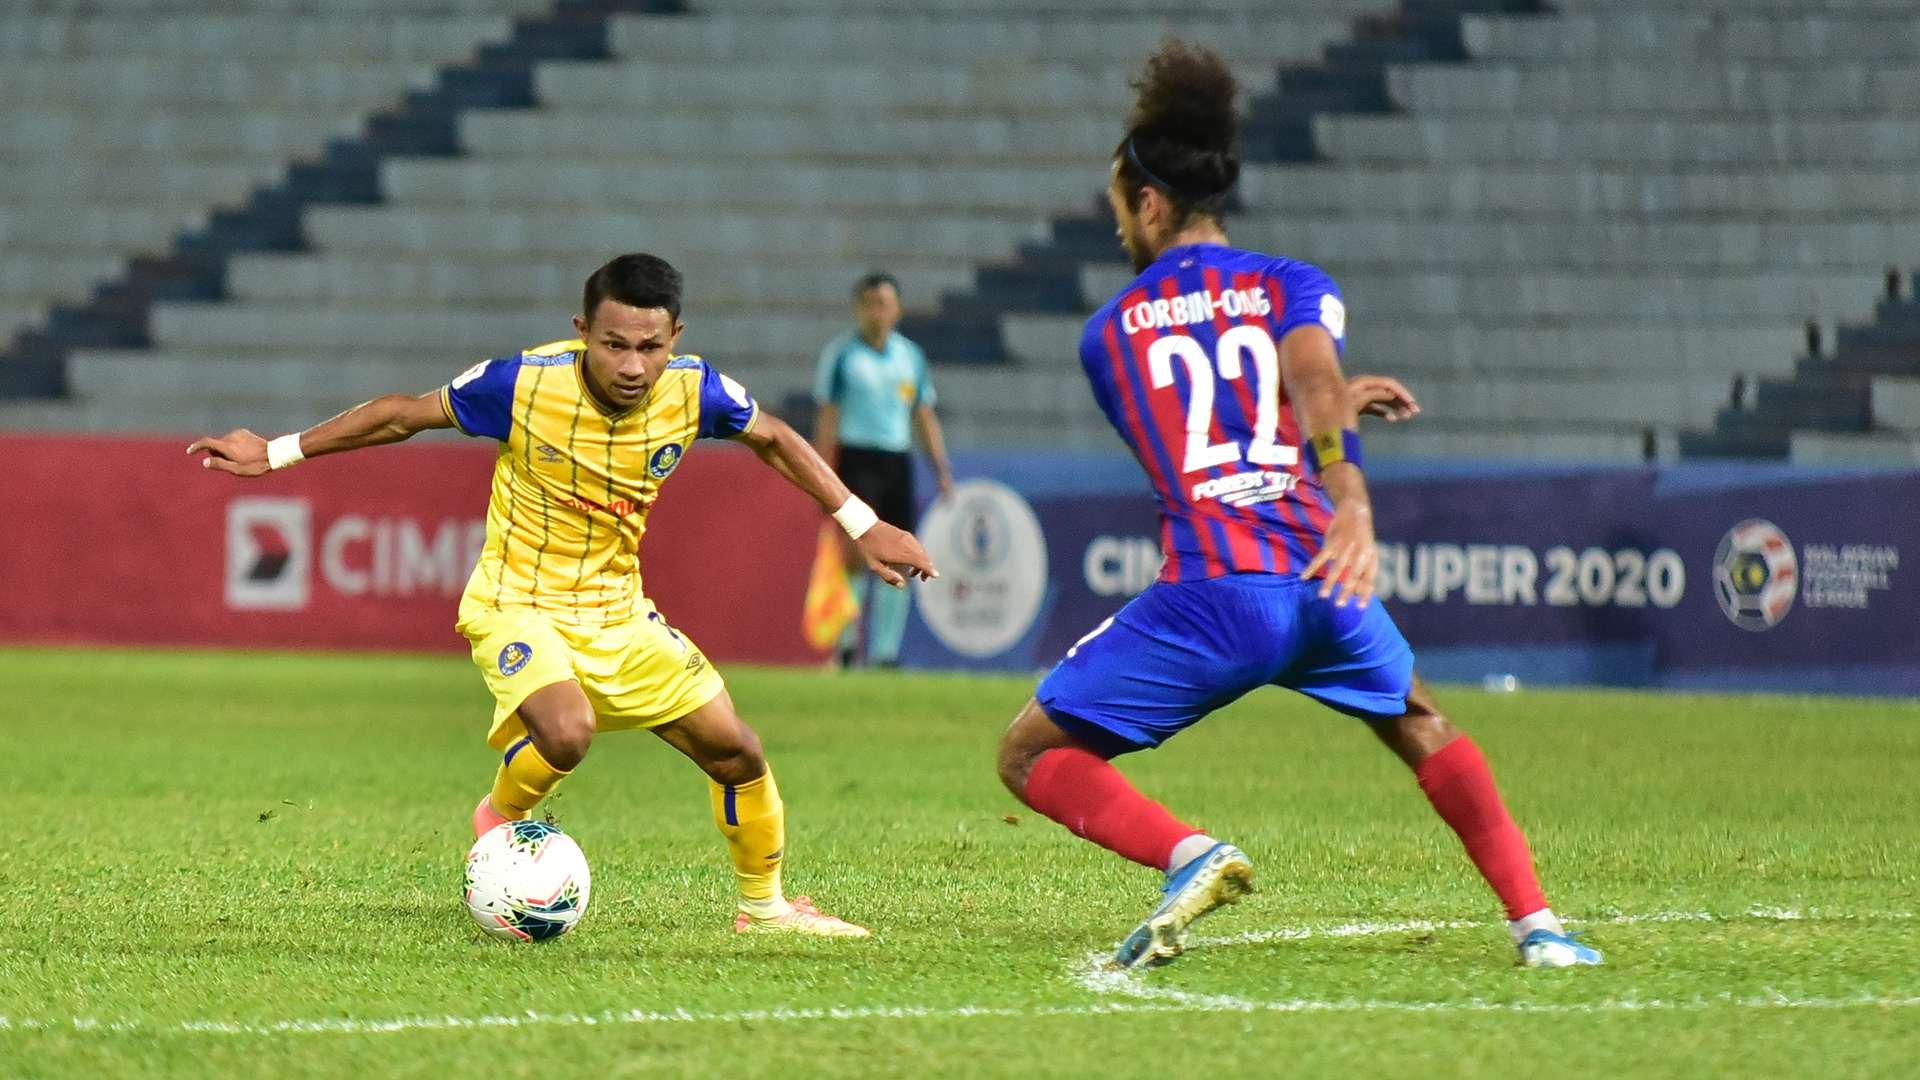 Faisal Halim, La'Vere Corbin-Ong, Johor Darul Ta'zim v Pahang, Super League, 28 Aug 2020